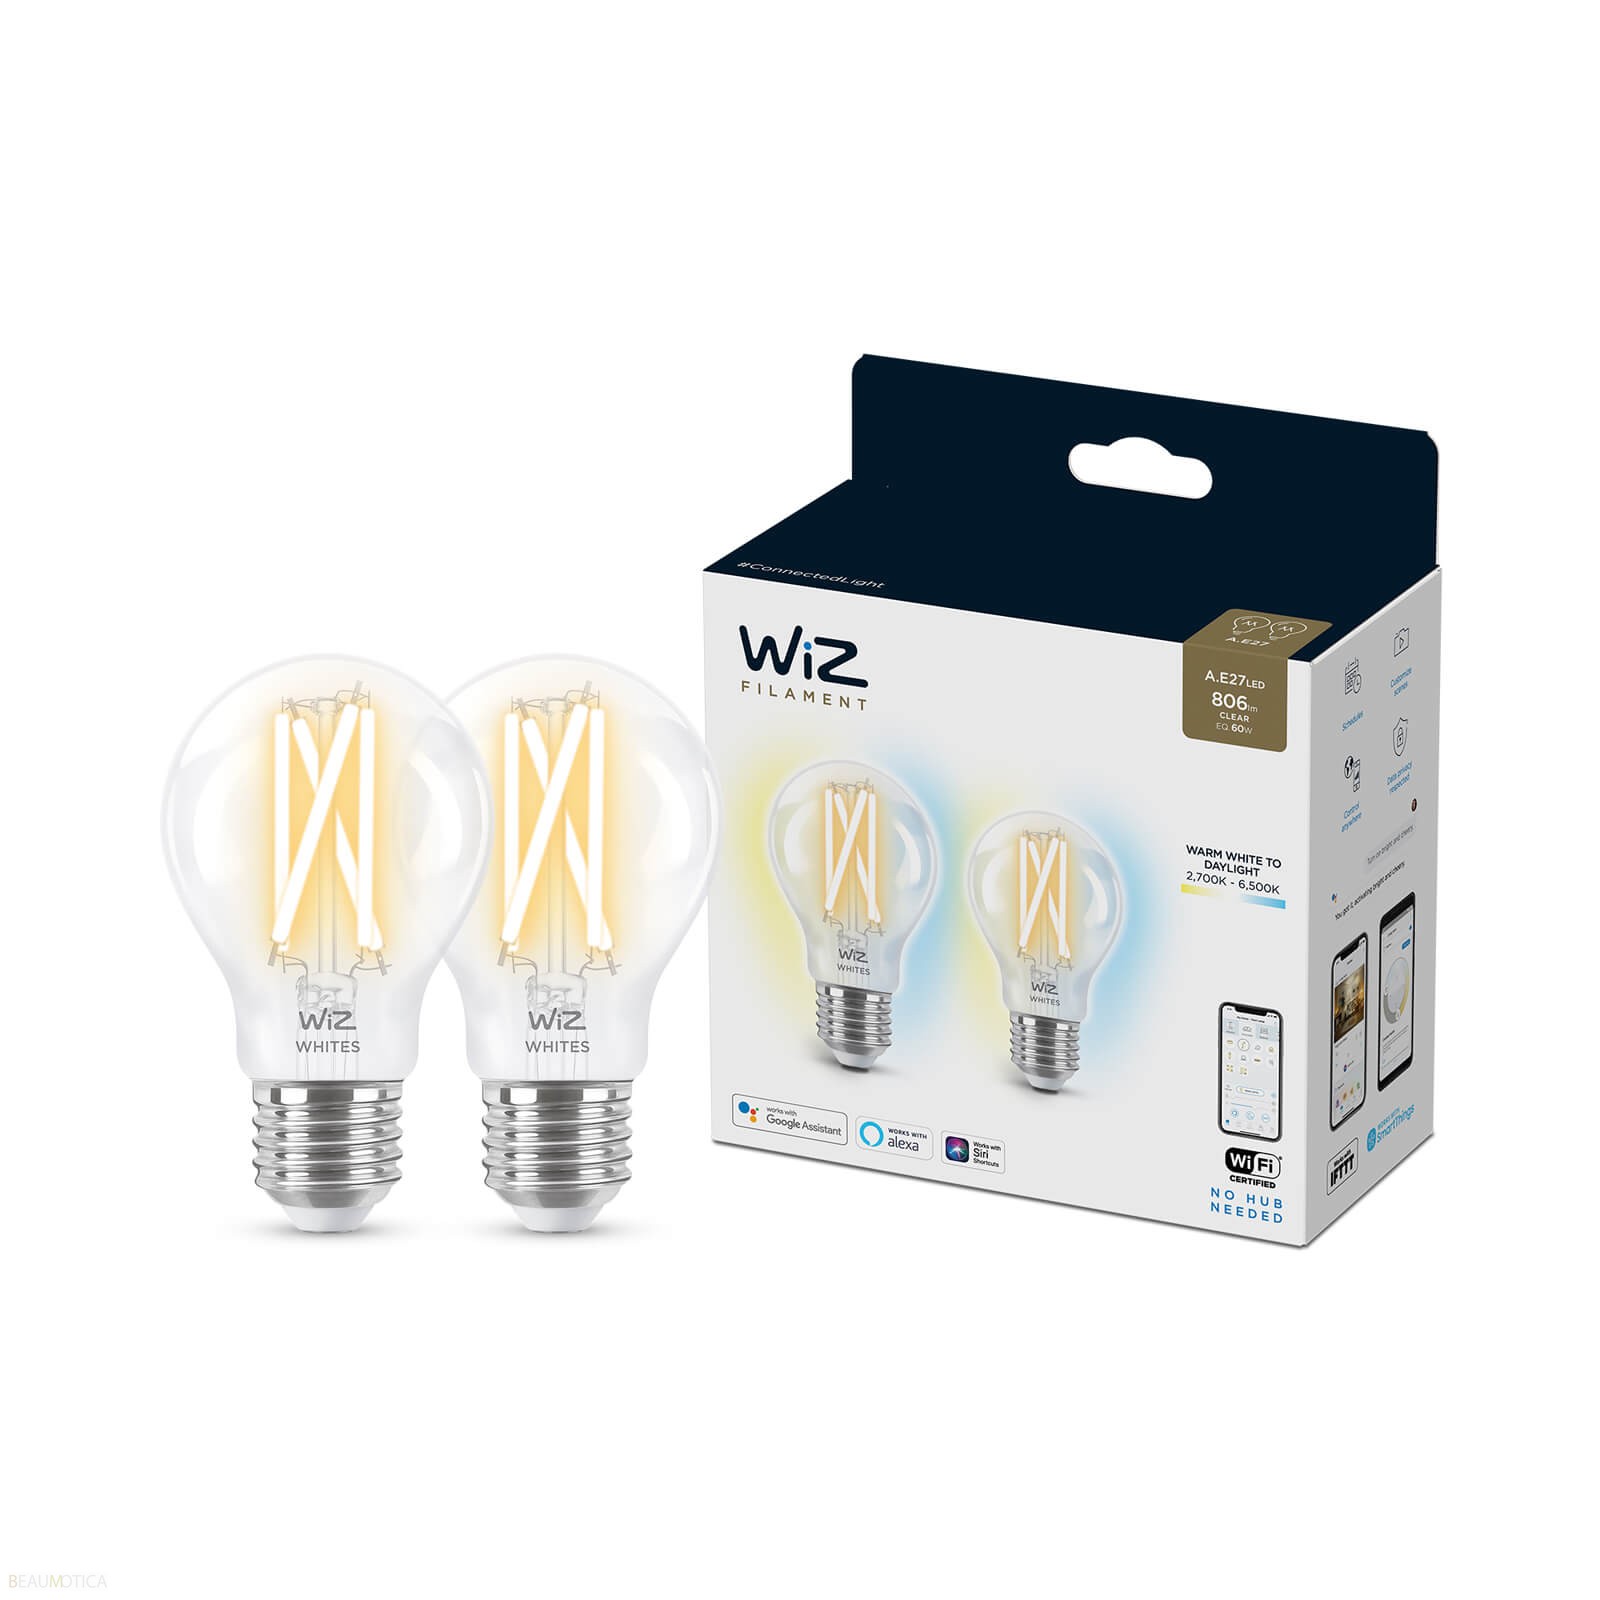 WiZ E27 Filament Edisonlamp Tunable White 2-Pack